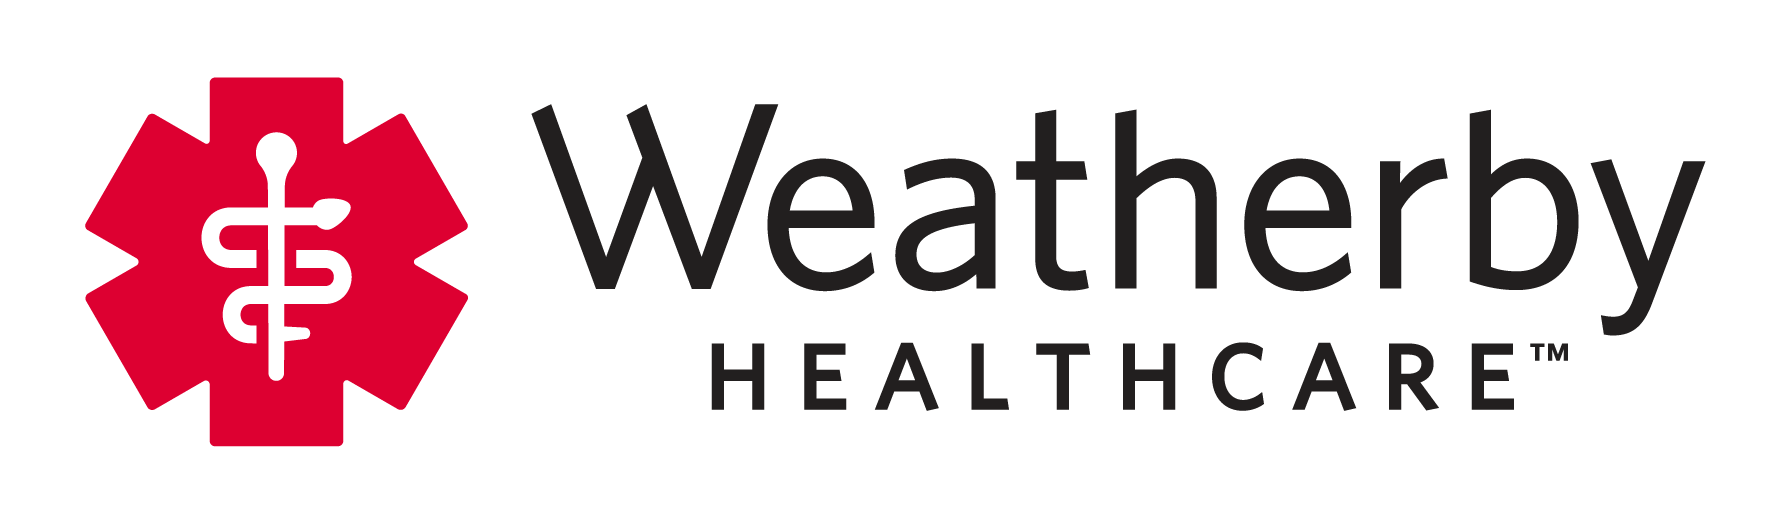 Weatherby Healthcare Company Logo